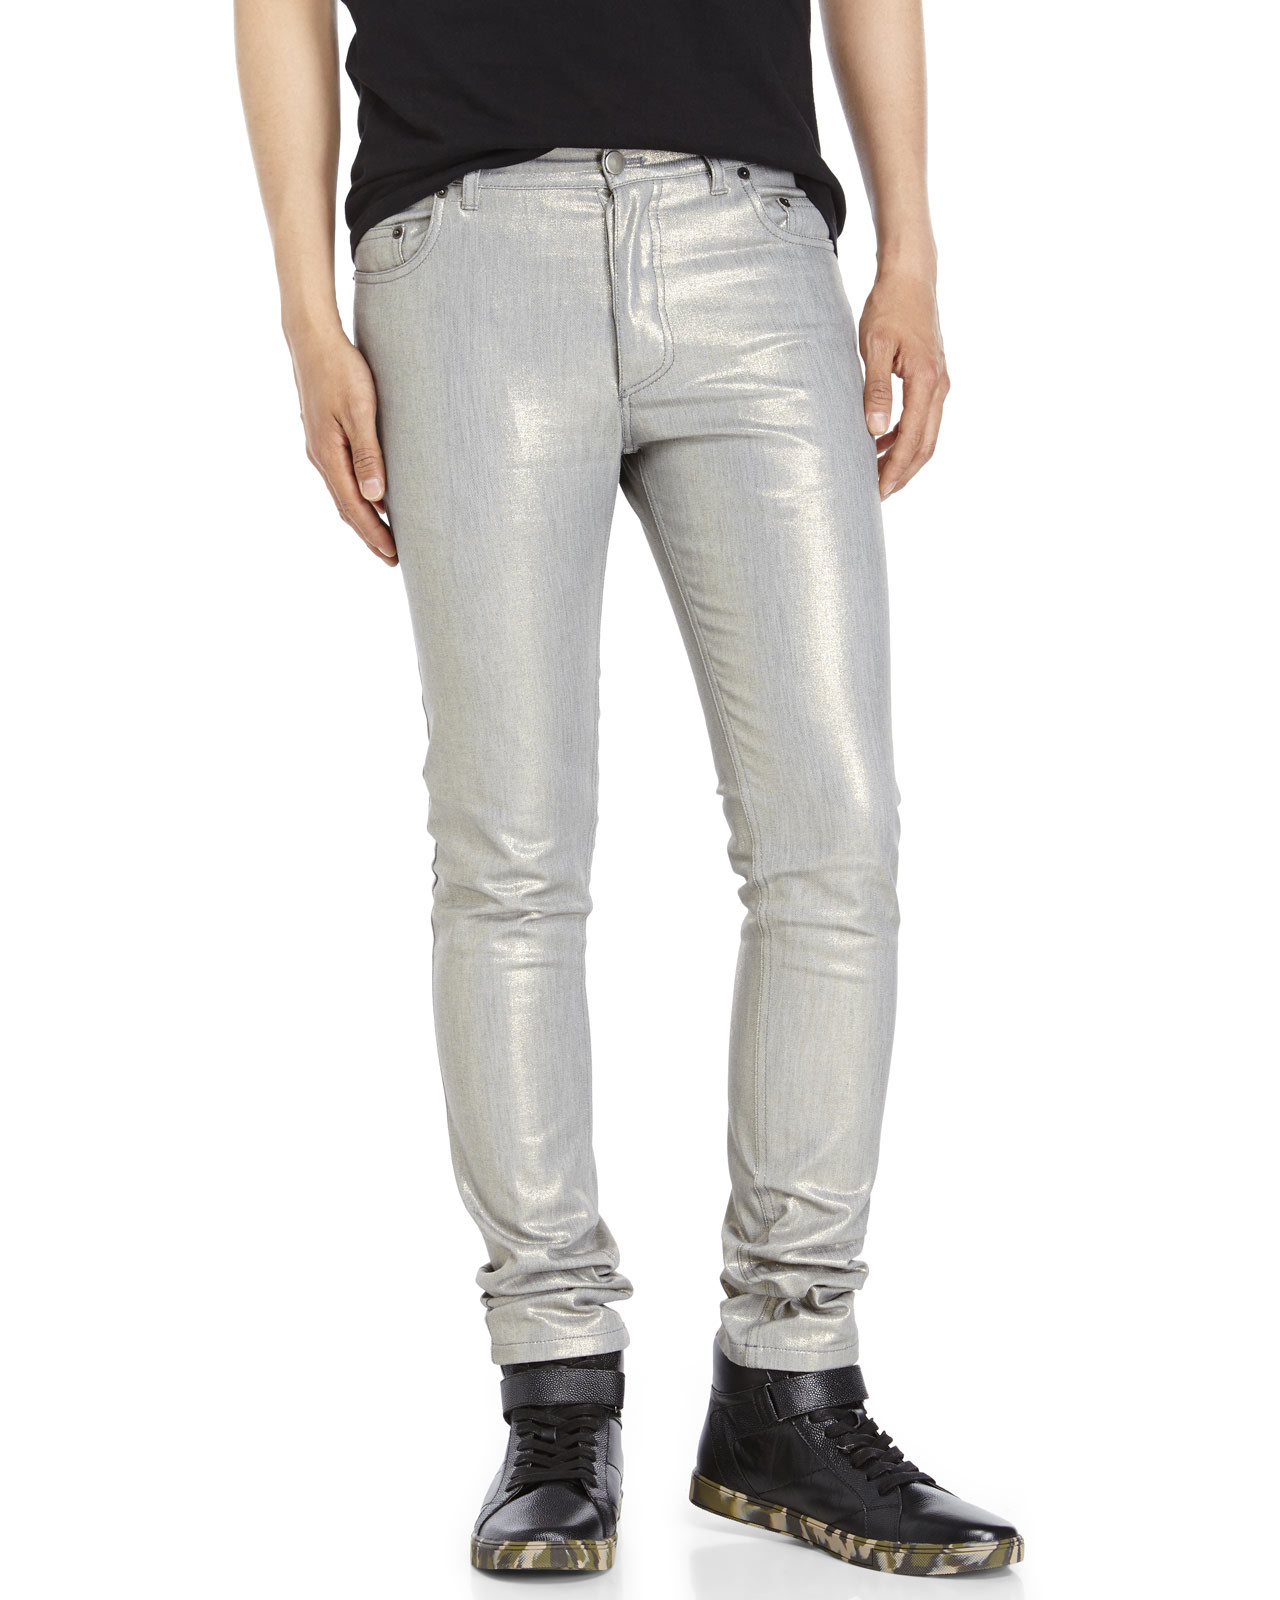 Lyst - Ann Demeulemeester Iridescent Glimmer Skinny Jeans in Metallic ...